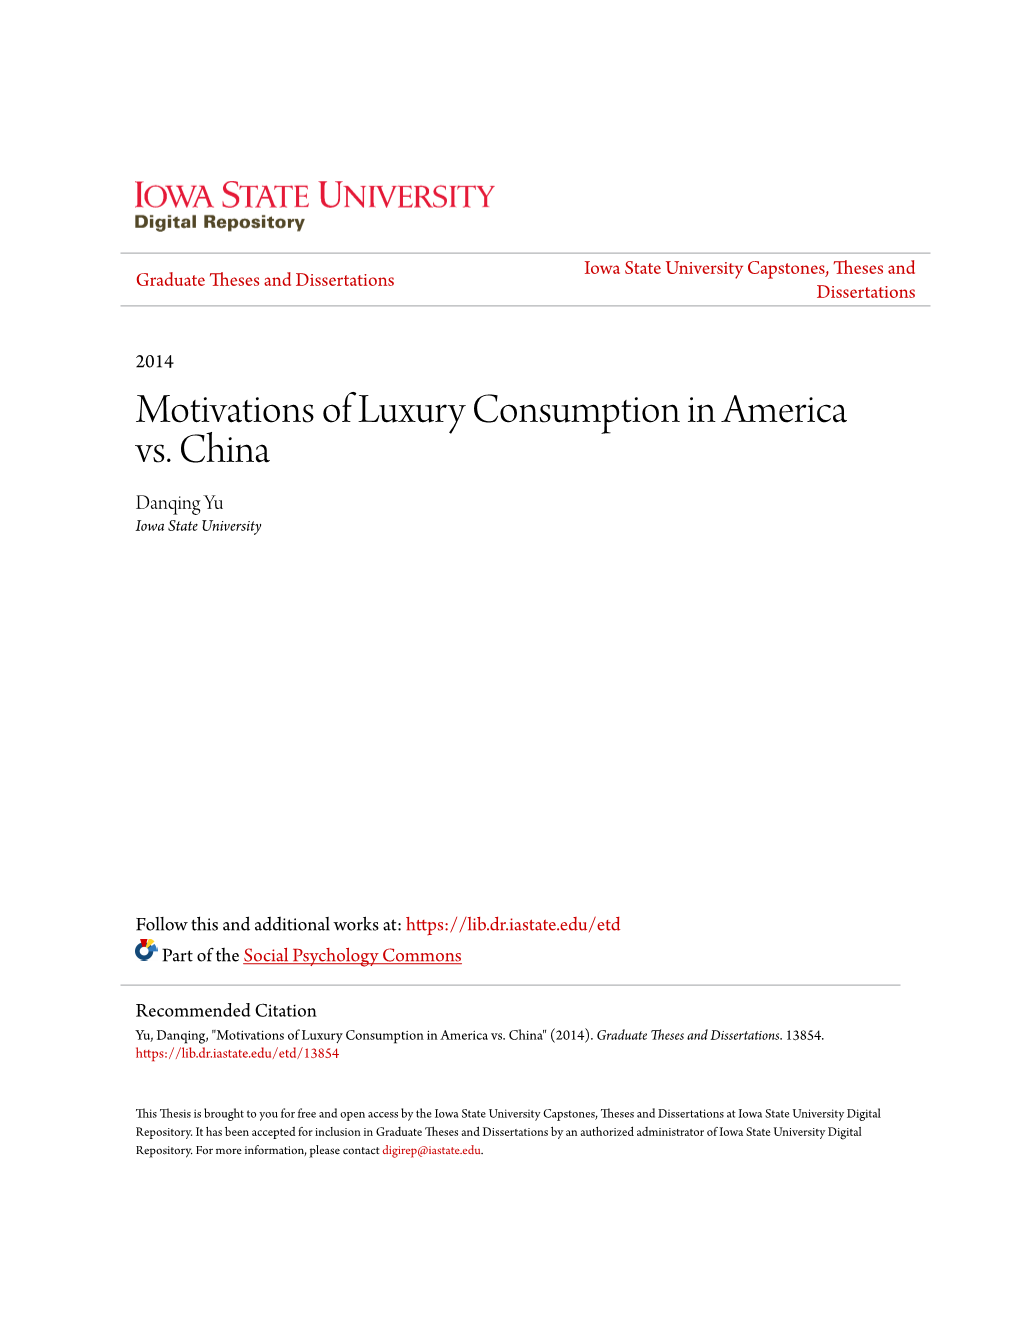 Motivations of Luxury Consumption in America Vs. China Danqing Yu Iowa State University